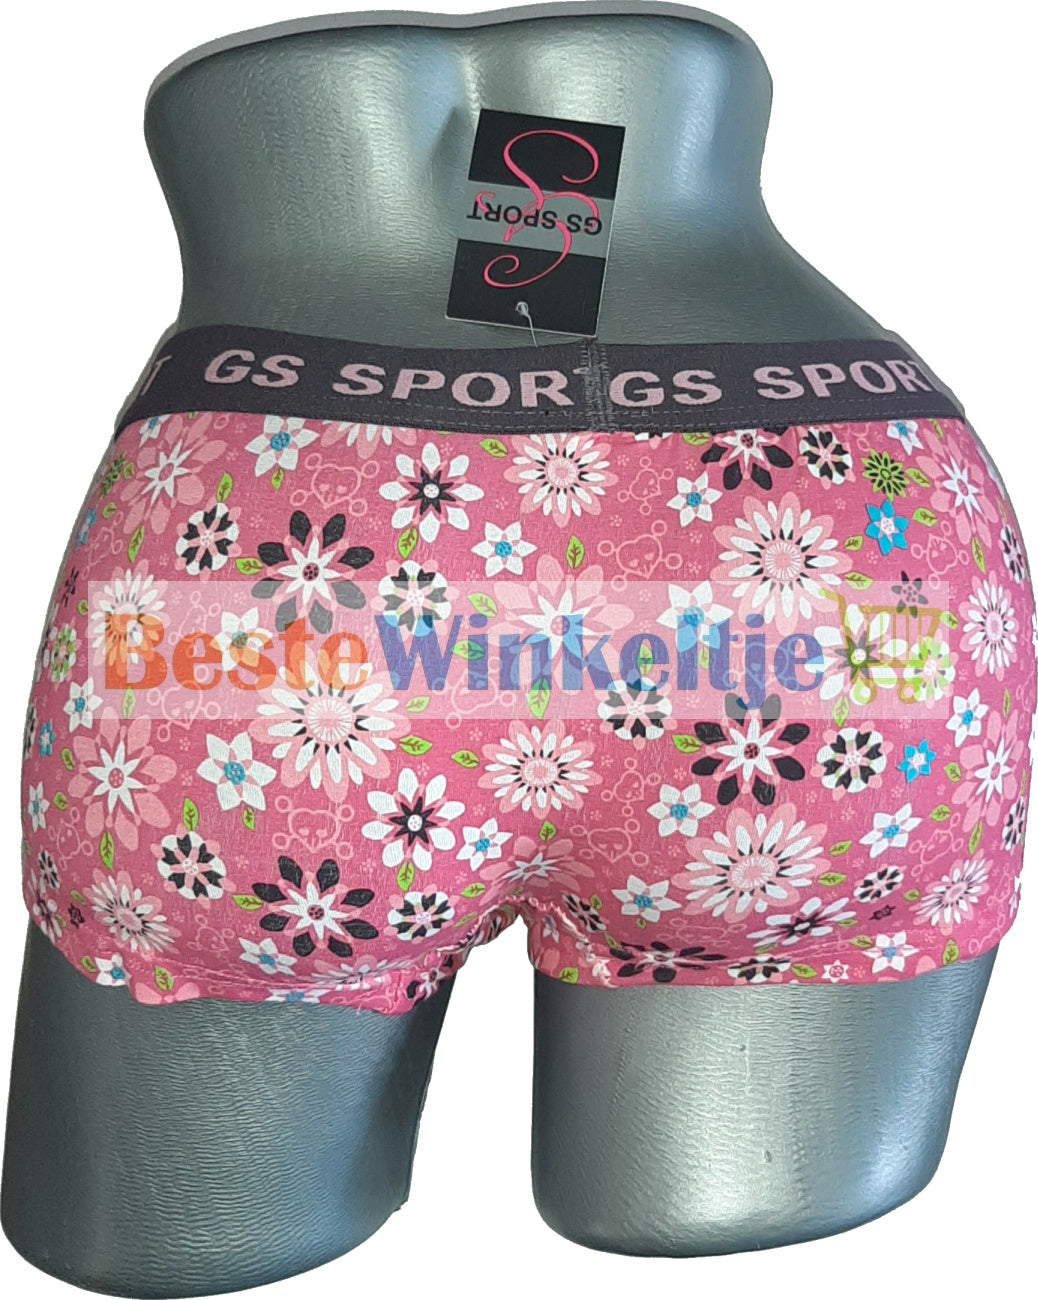 2 pack GS Sport Dames Print Roze/Antracite